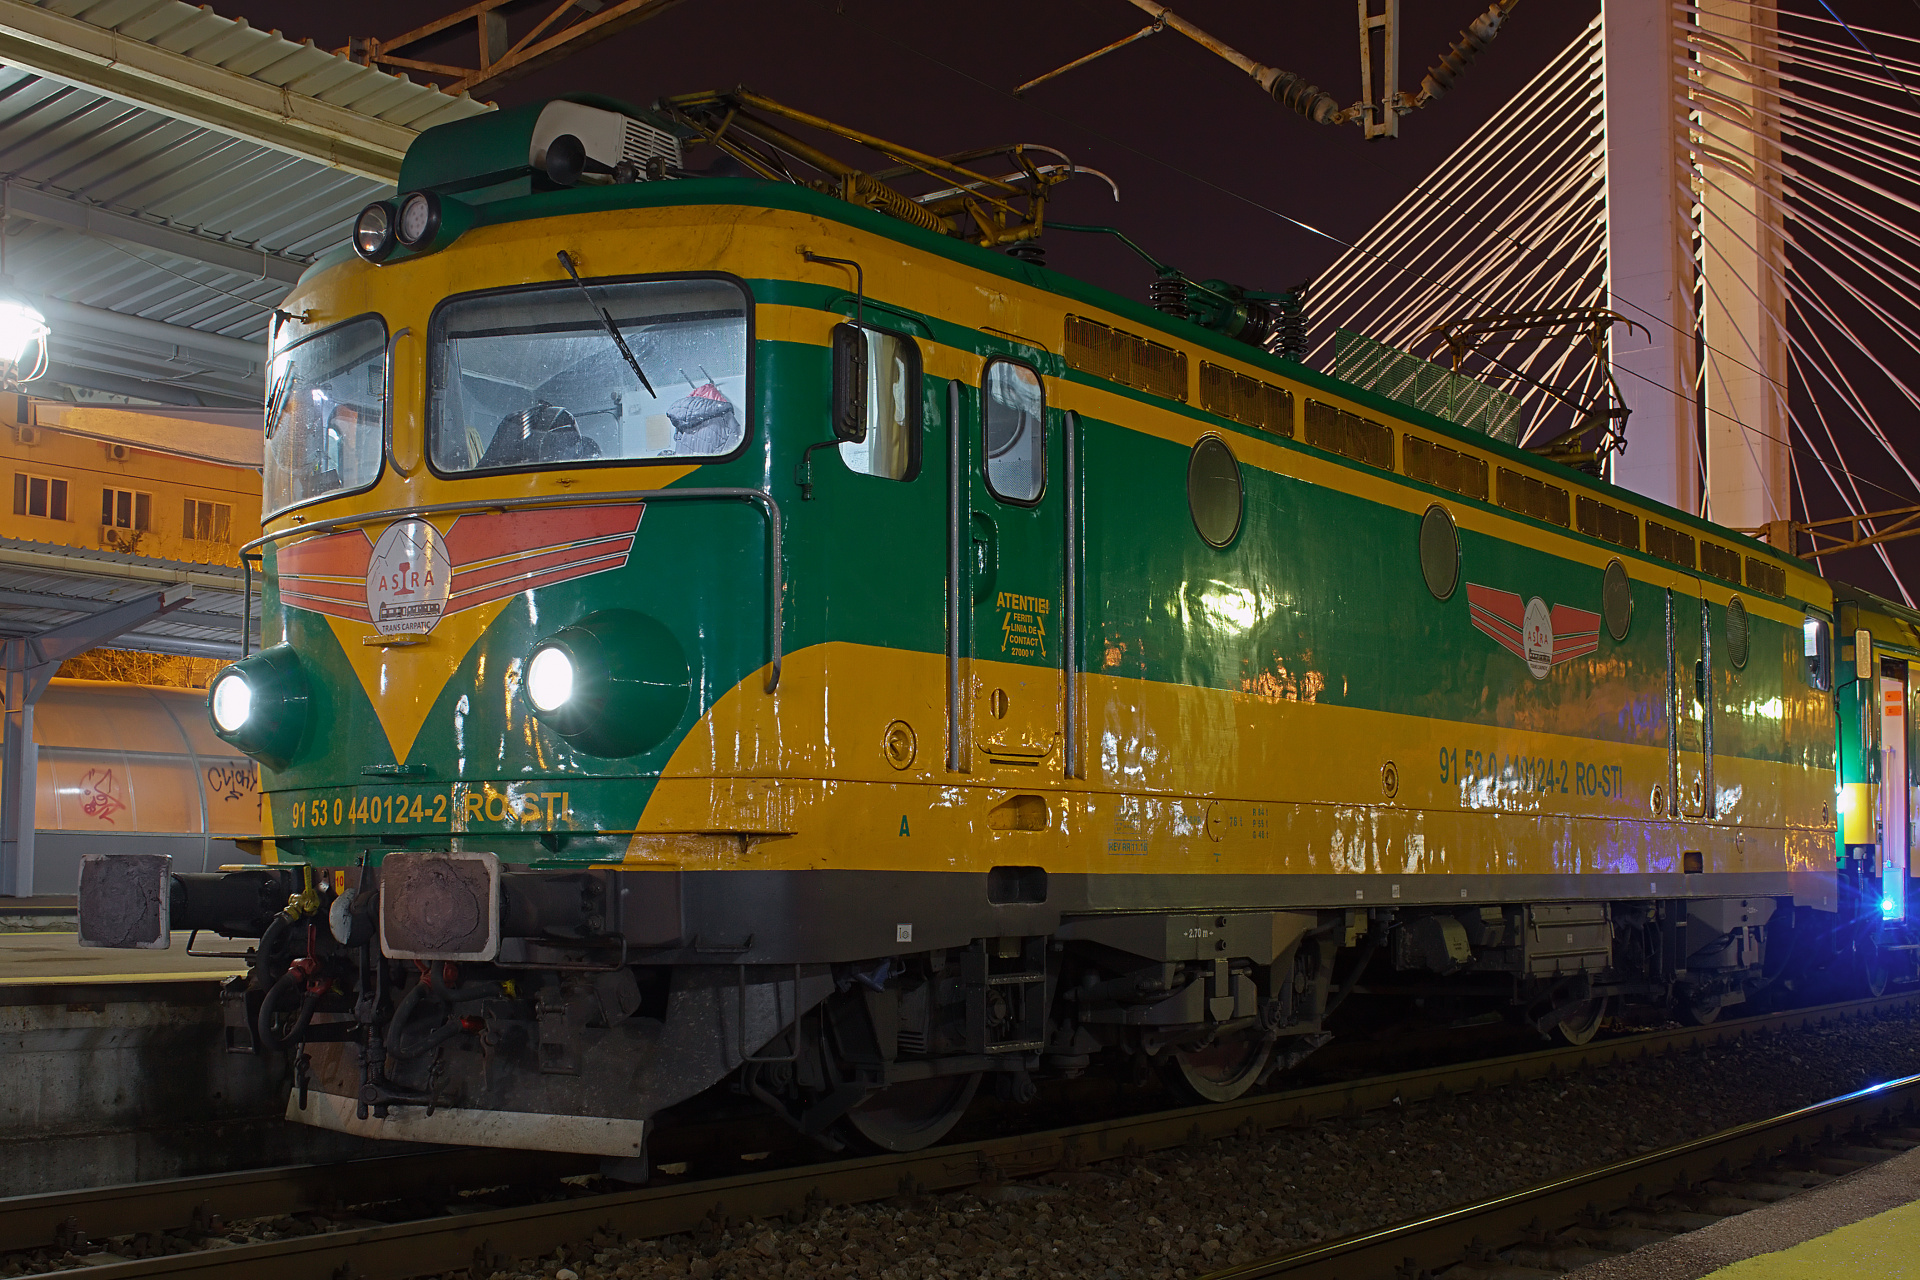 Končar 441 Class 44 0124-2 (Travels » Bucharest » Trains and Locomotives)